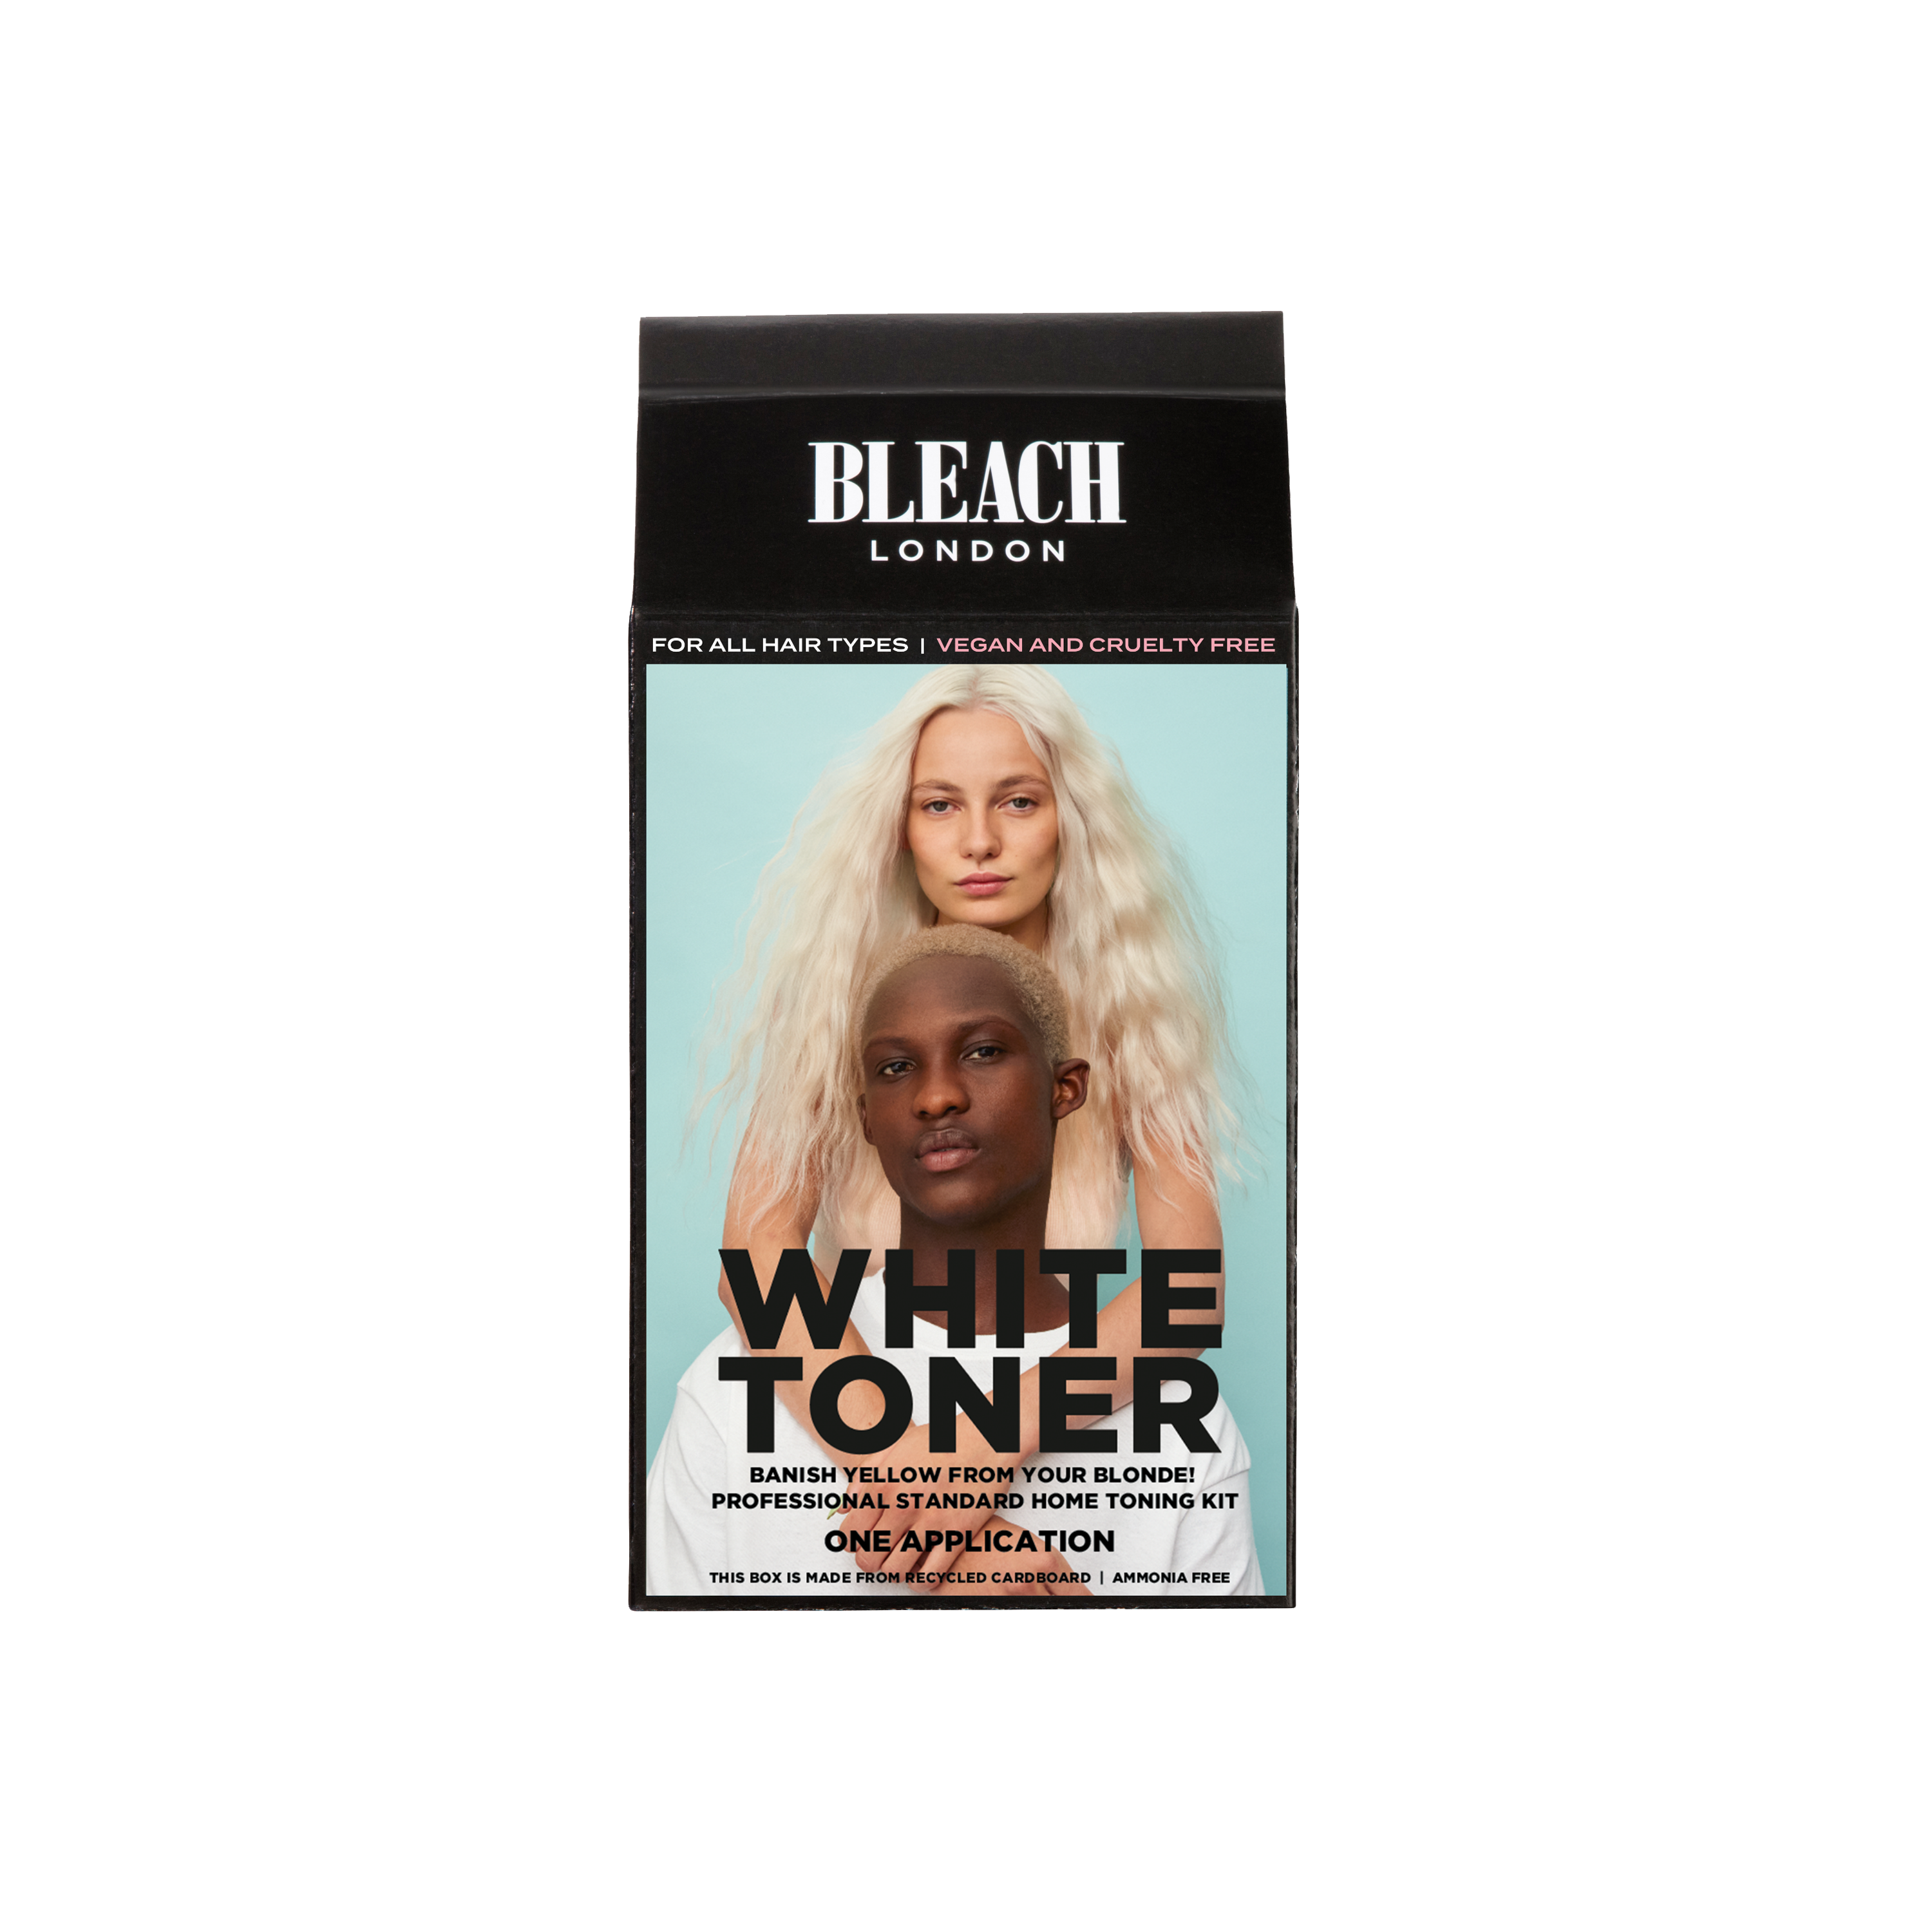 Bleach London White Toner Kit Platinum Hair Dye | bleachlondon.com | Bleach London